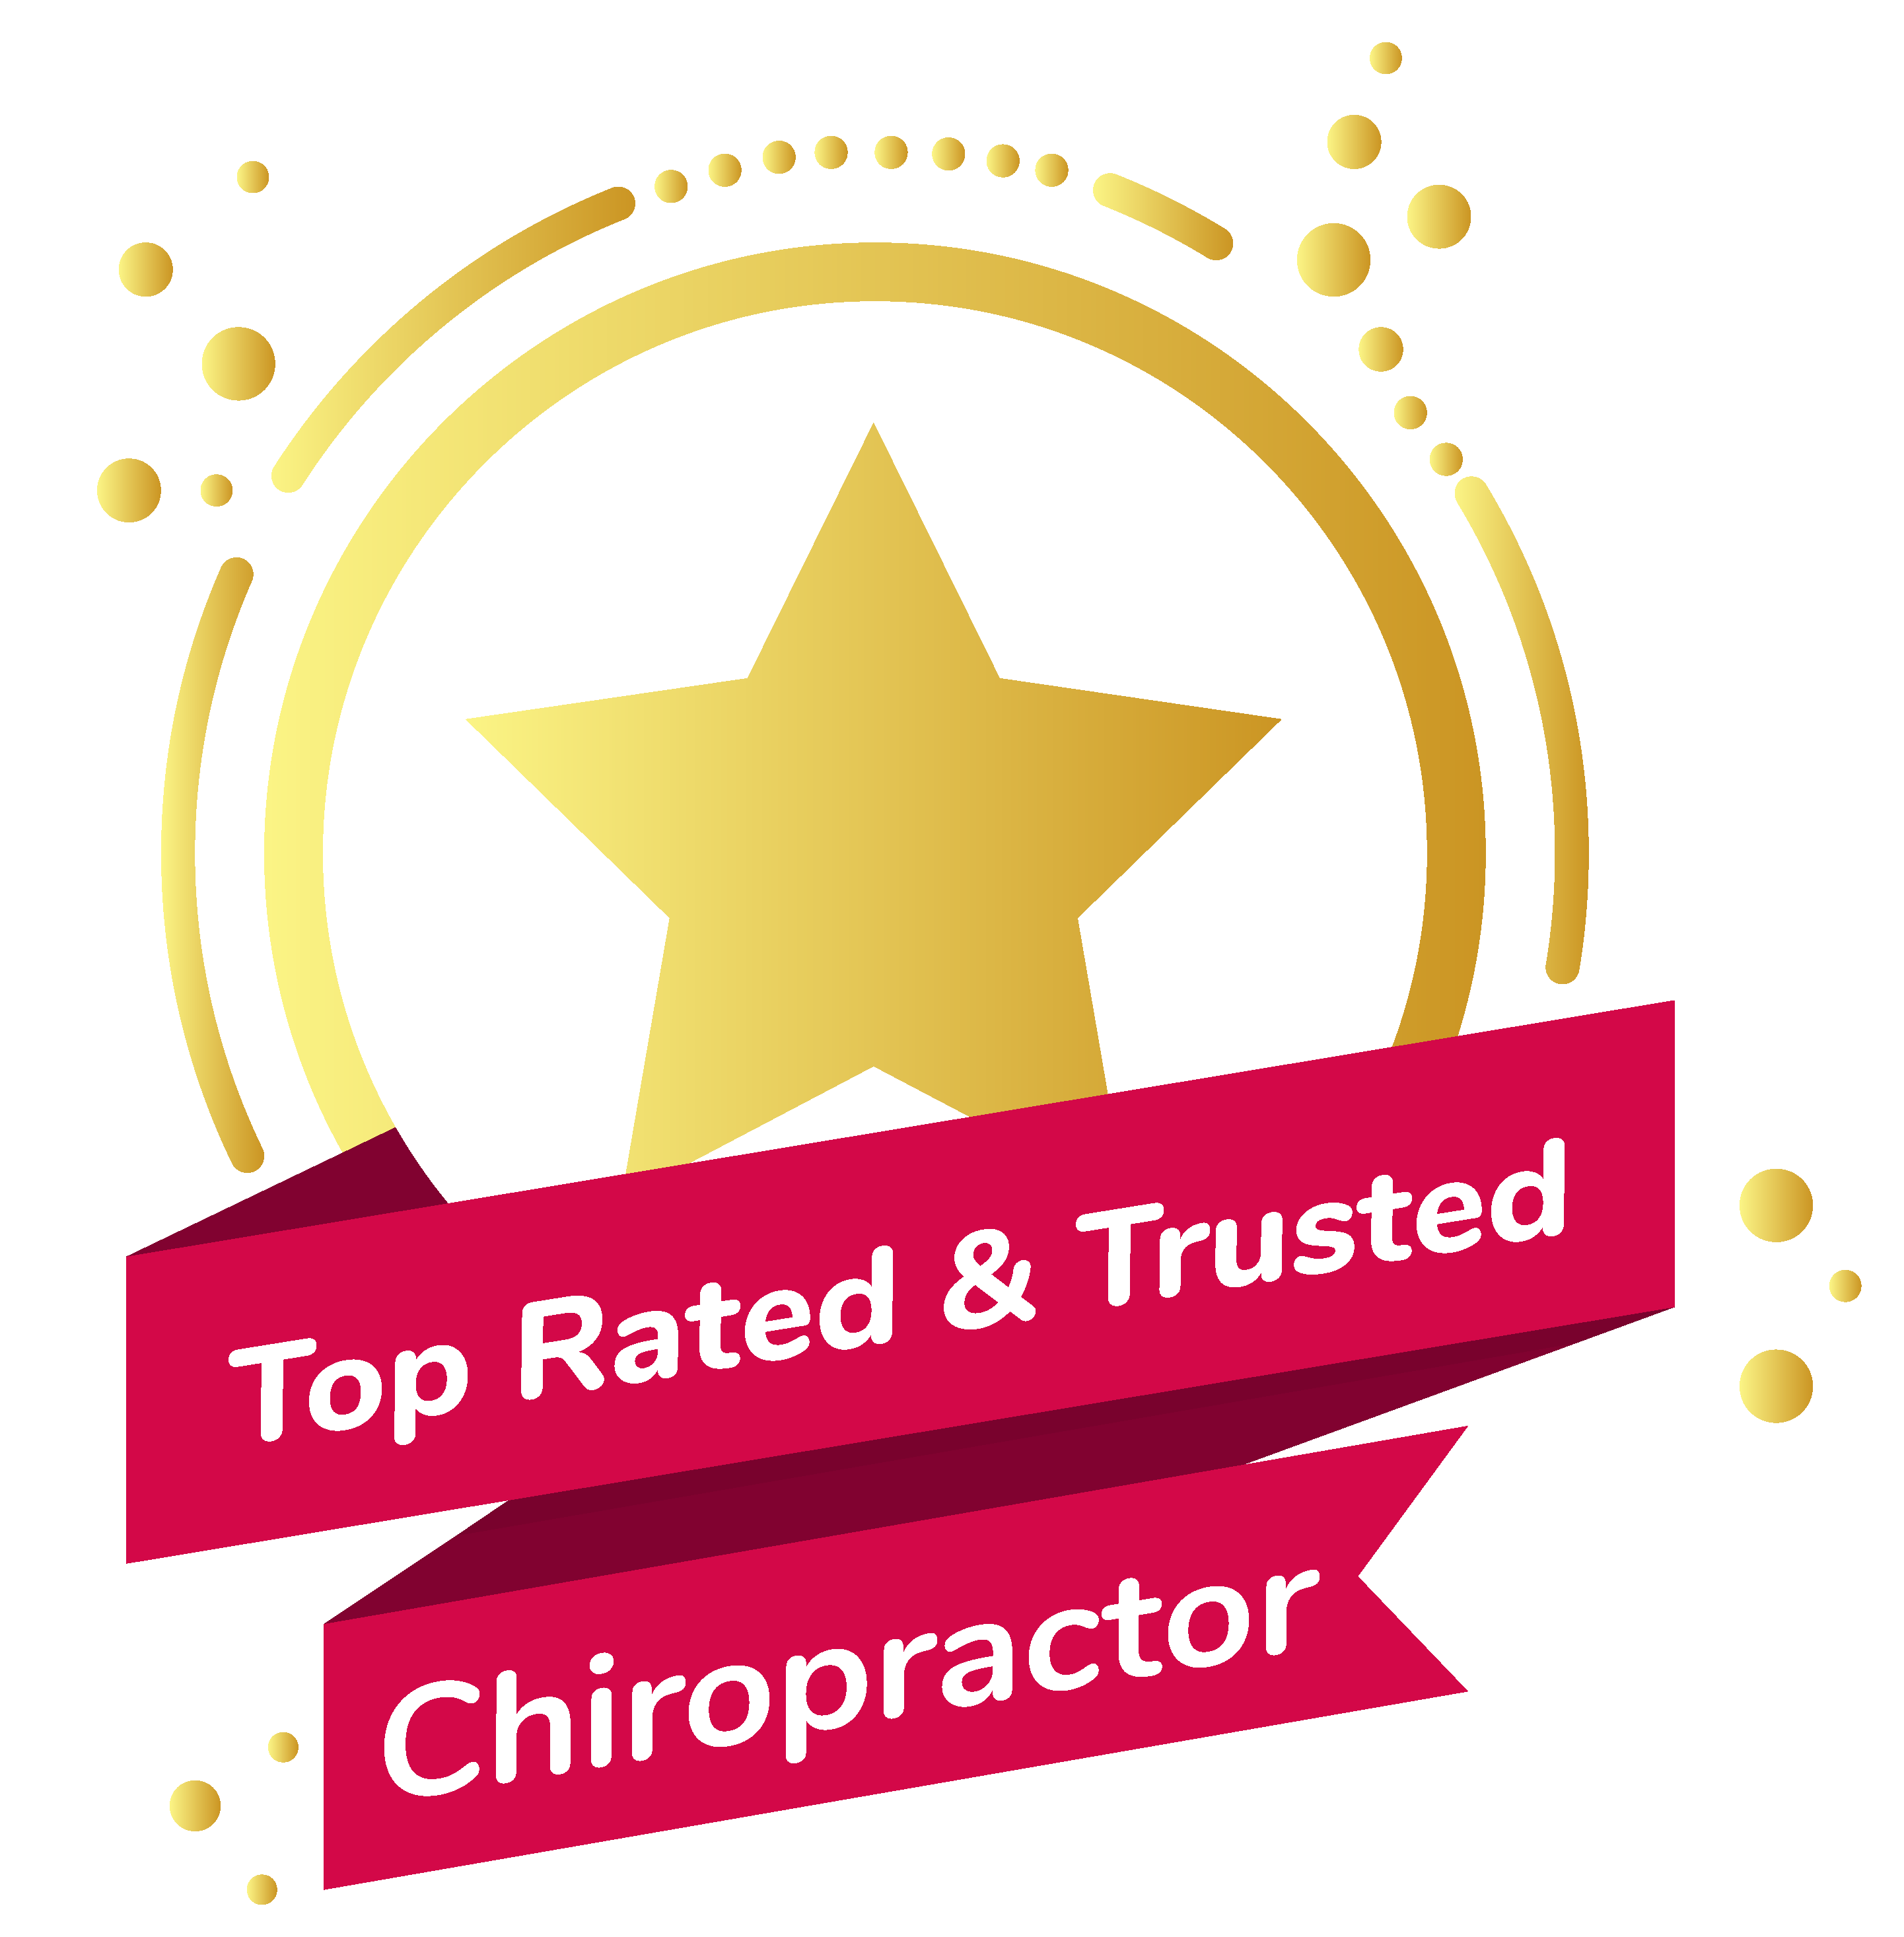 Top rated and trusted chiropractor in Elkhorn, Nebraska